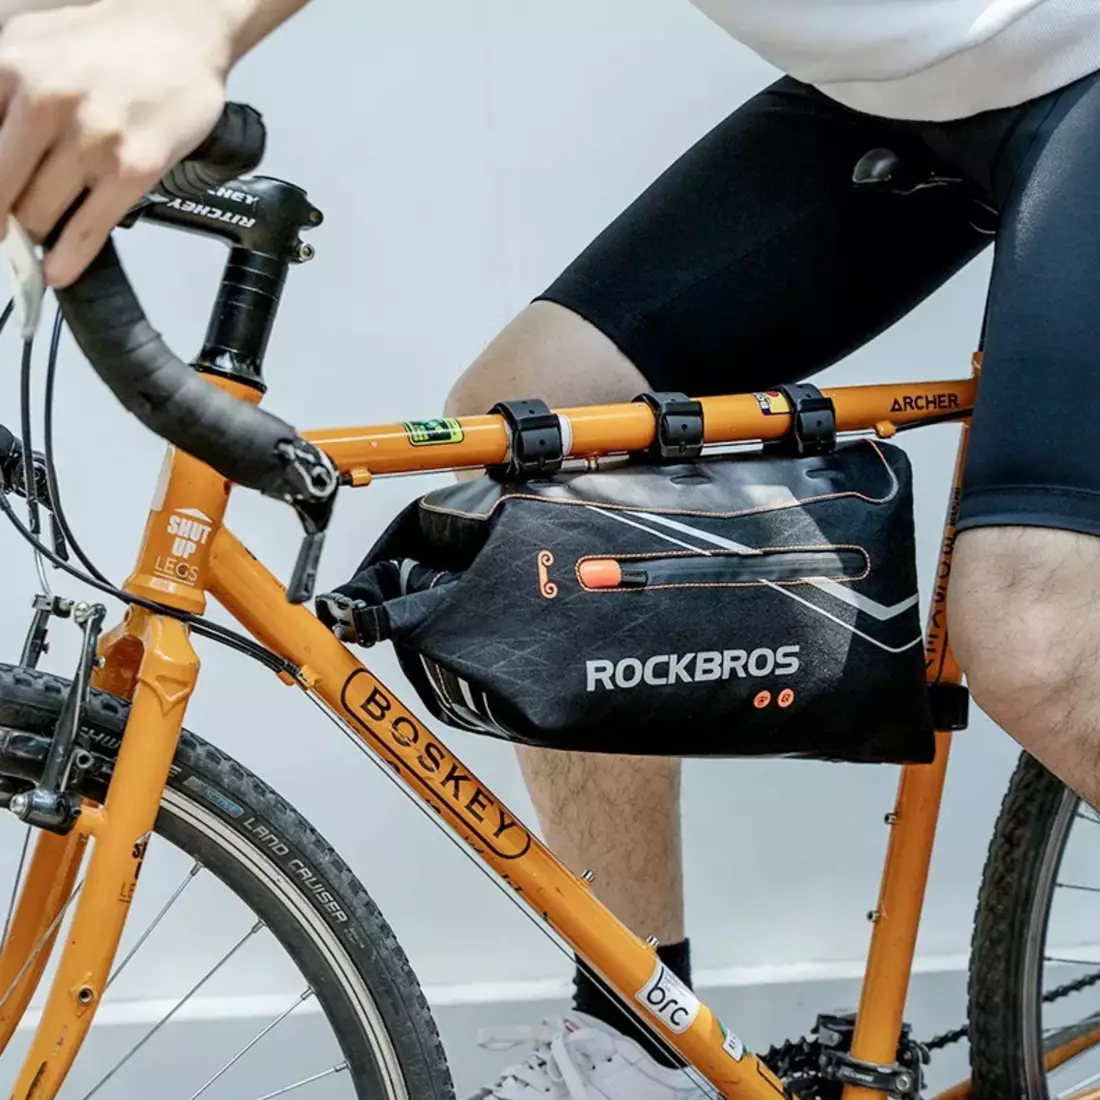 Rockbros Roll-up Bicycle Frame Bag, Black 30120016001